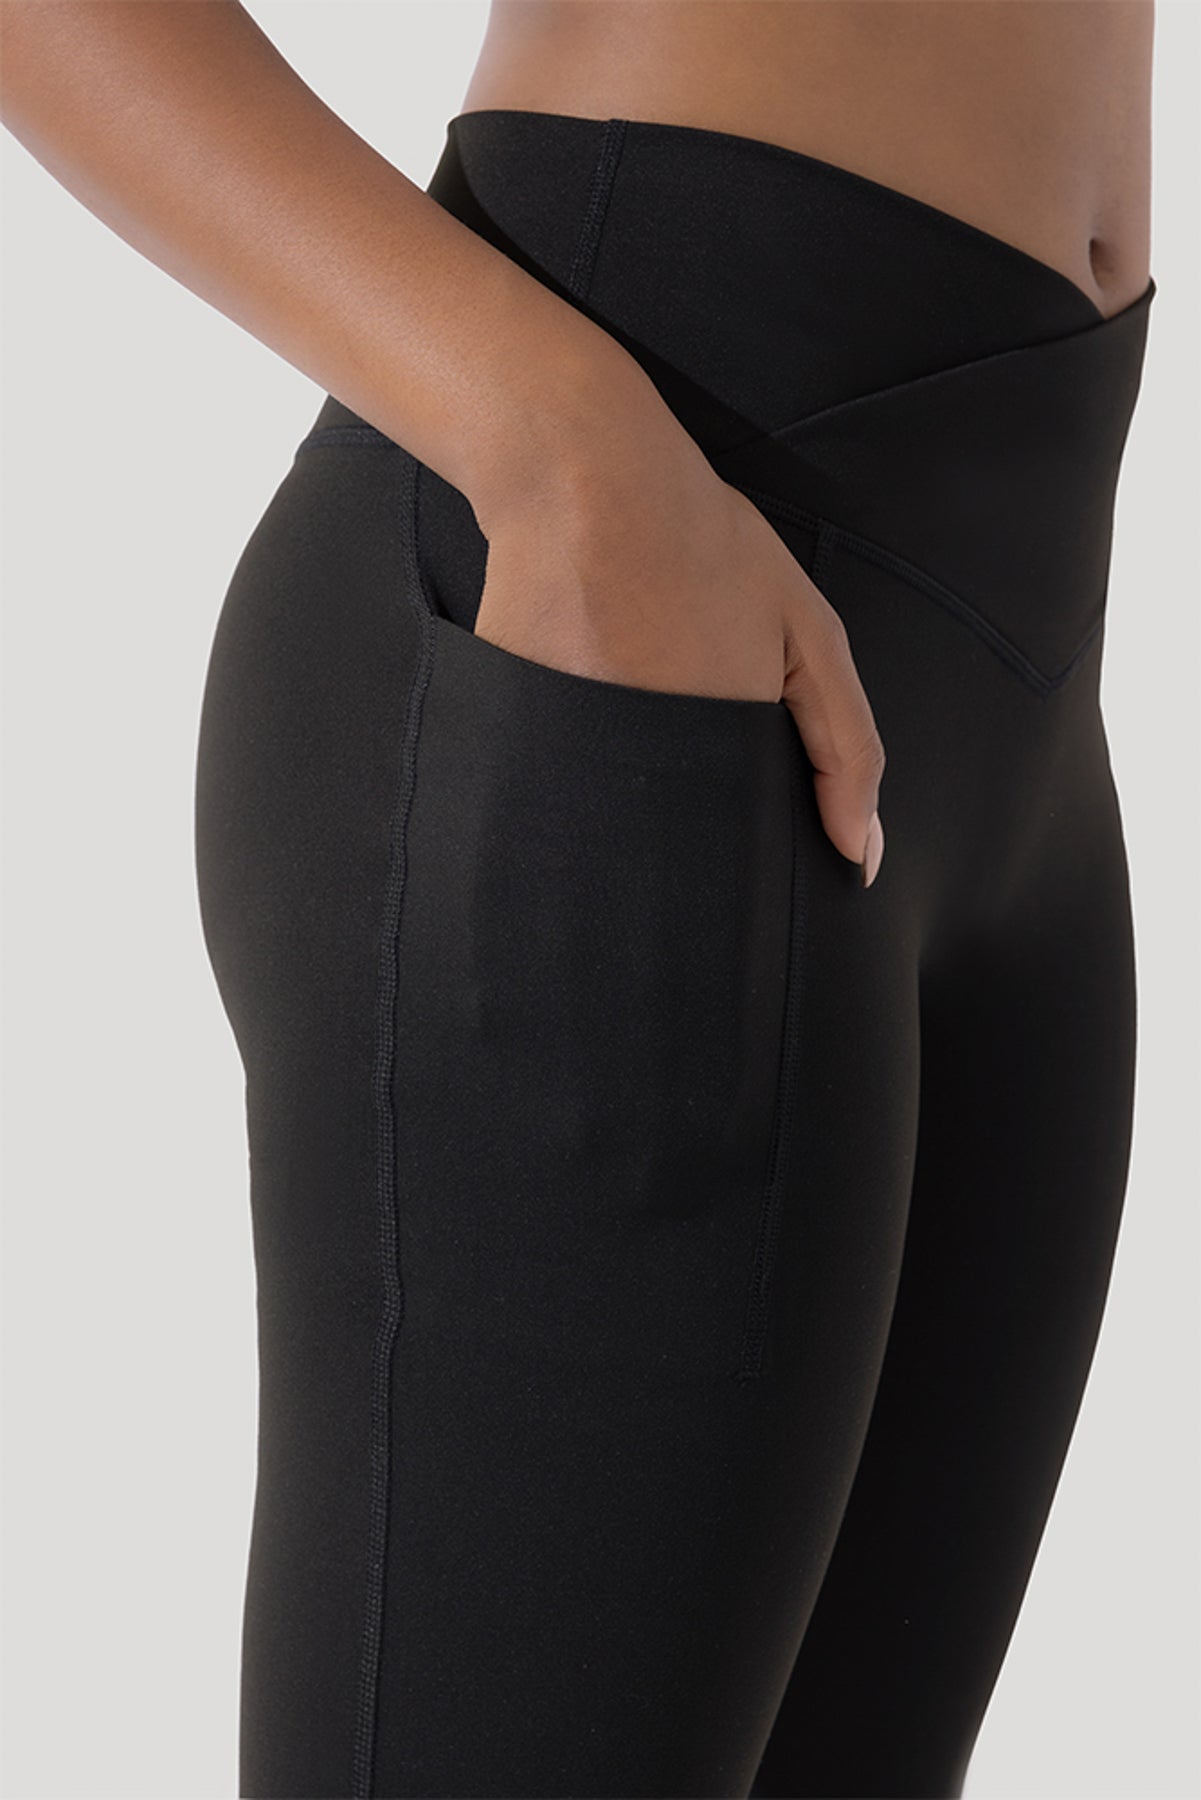 POPFLEX Crisscross Hourglass® Legging With Pockets in Vegan Stretch Leather  - 29 - Black